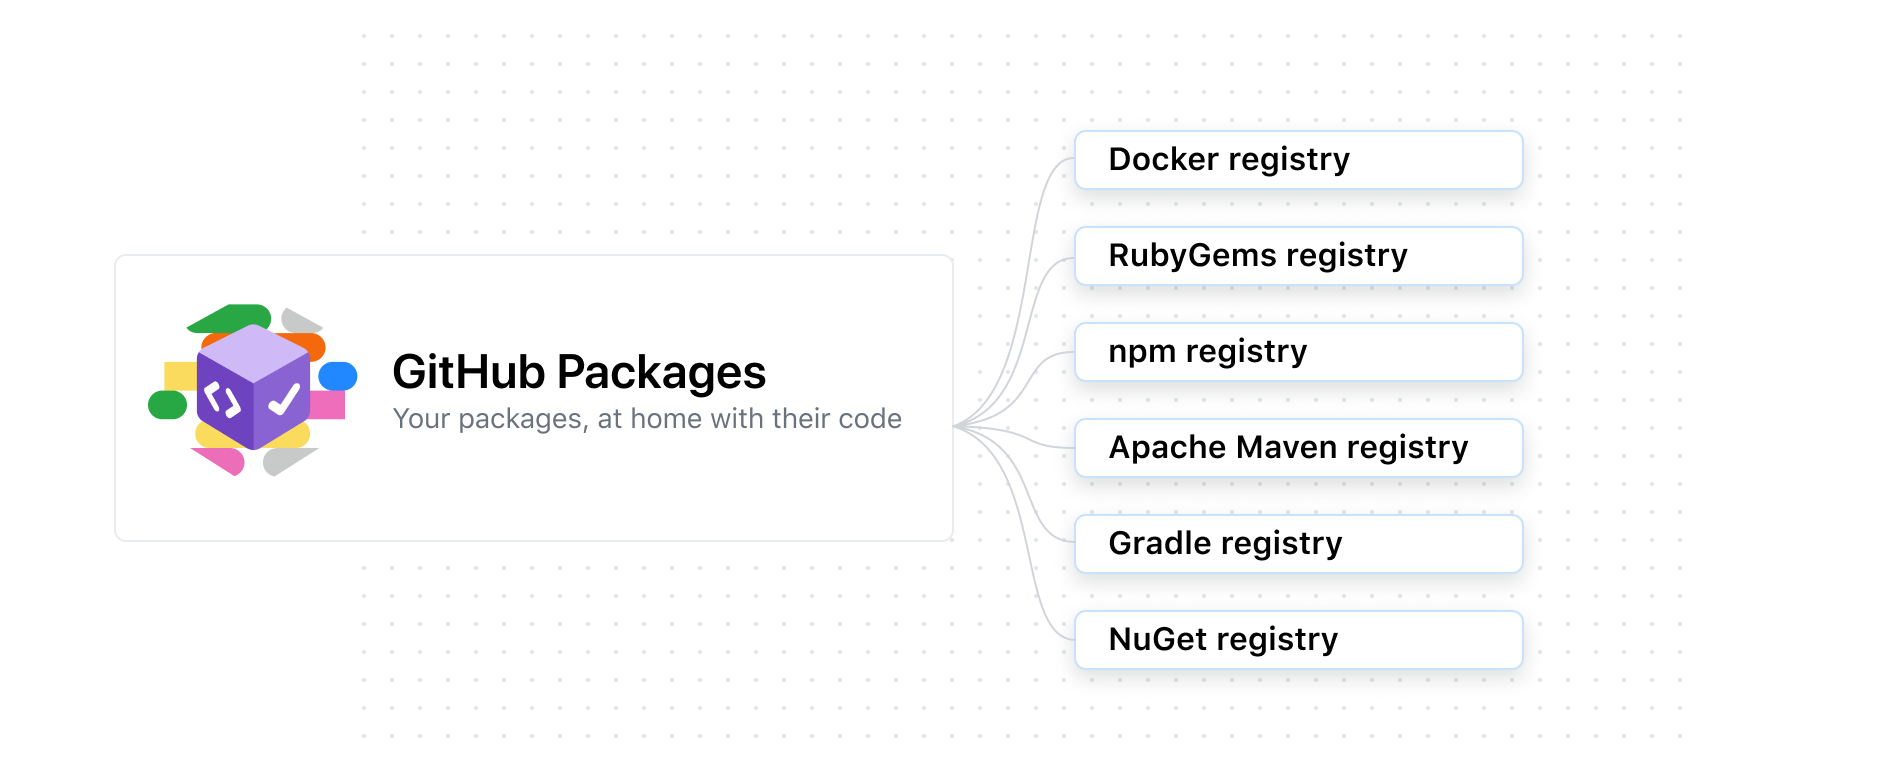 Dockerレジストリ、RubyGems、npm、Apache Maven、Gradle、Nuget、Dockerに対するパッケージサポートを示す図